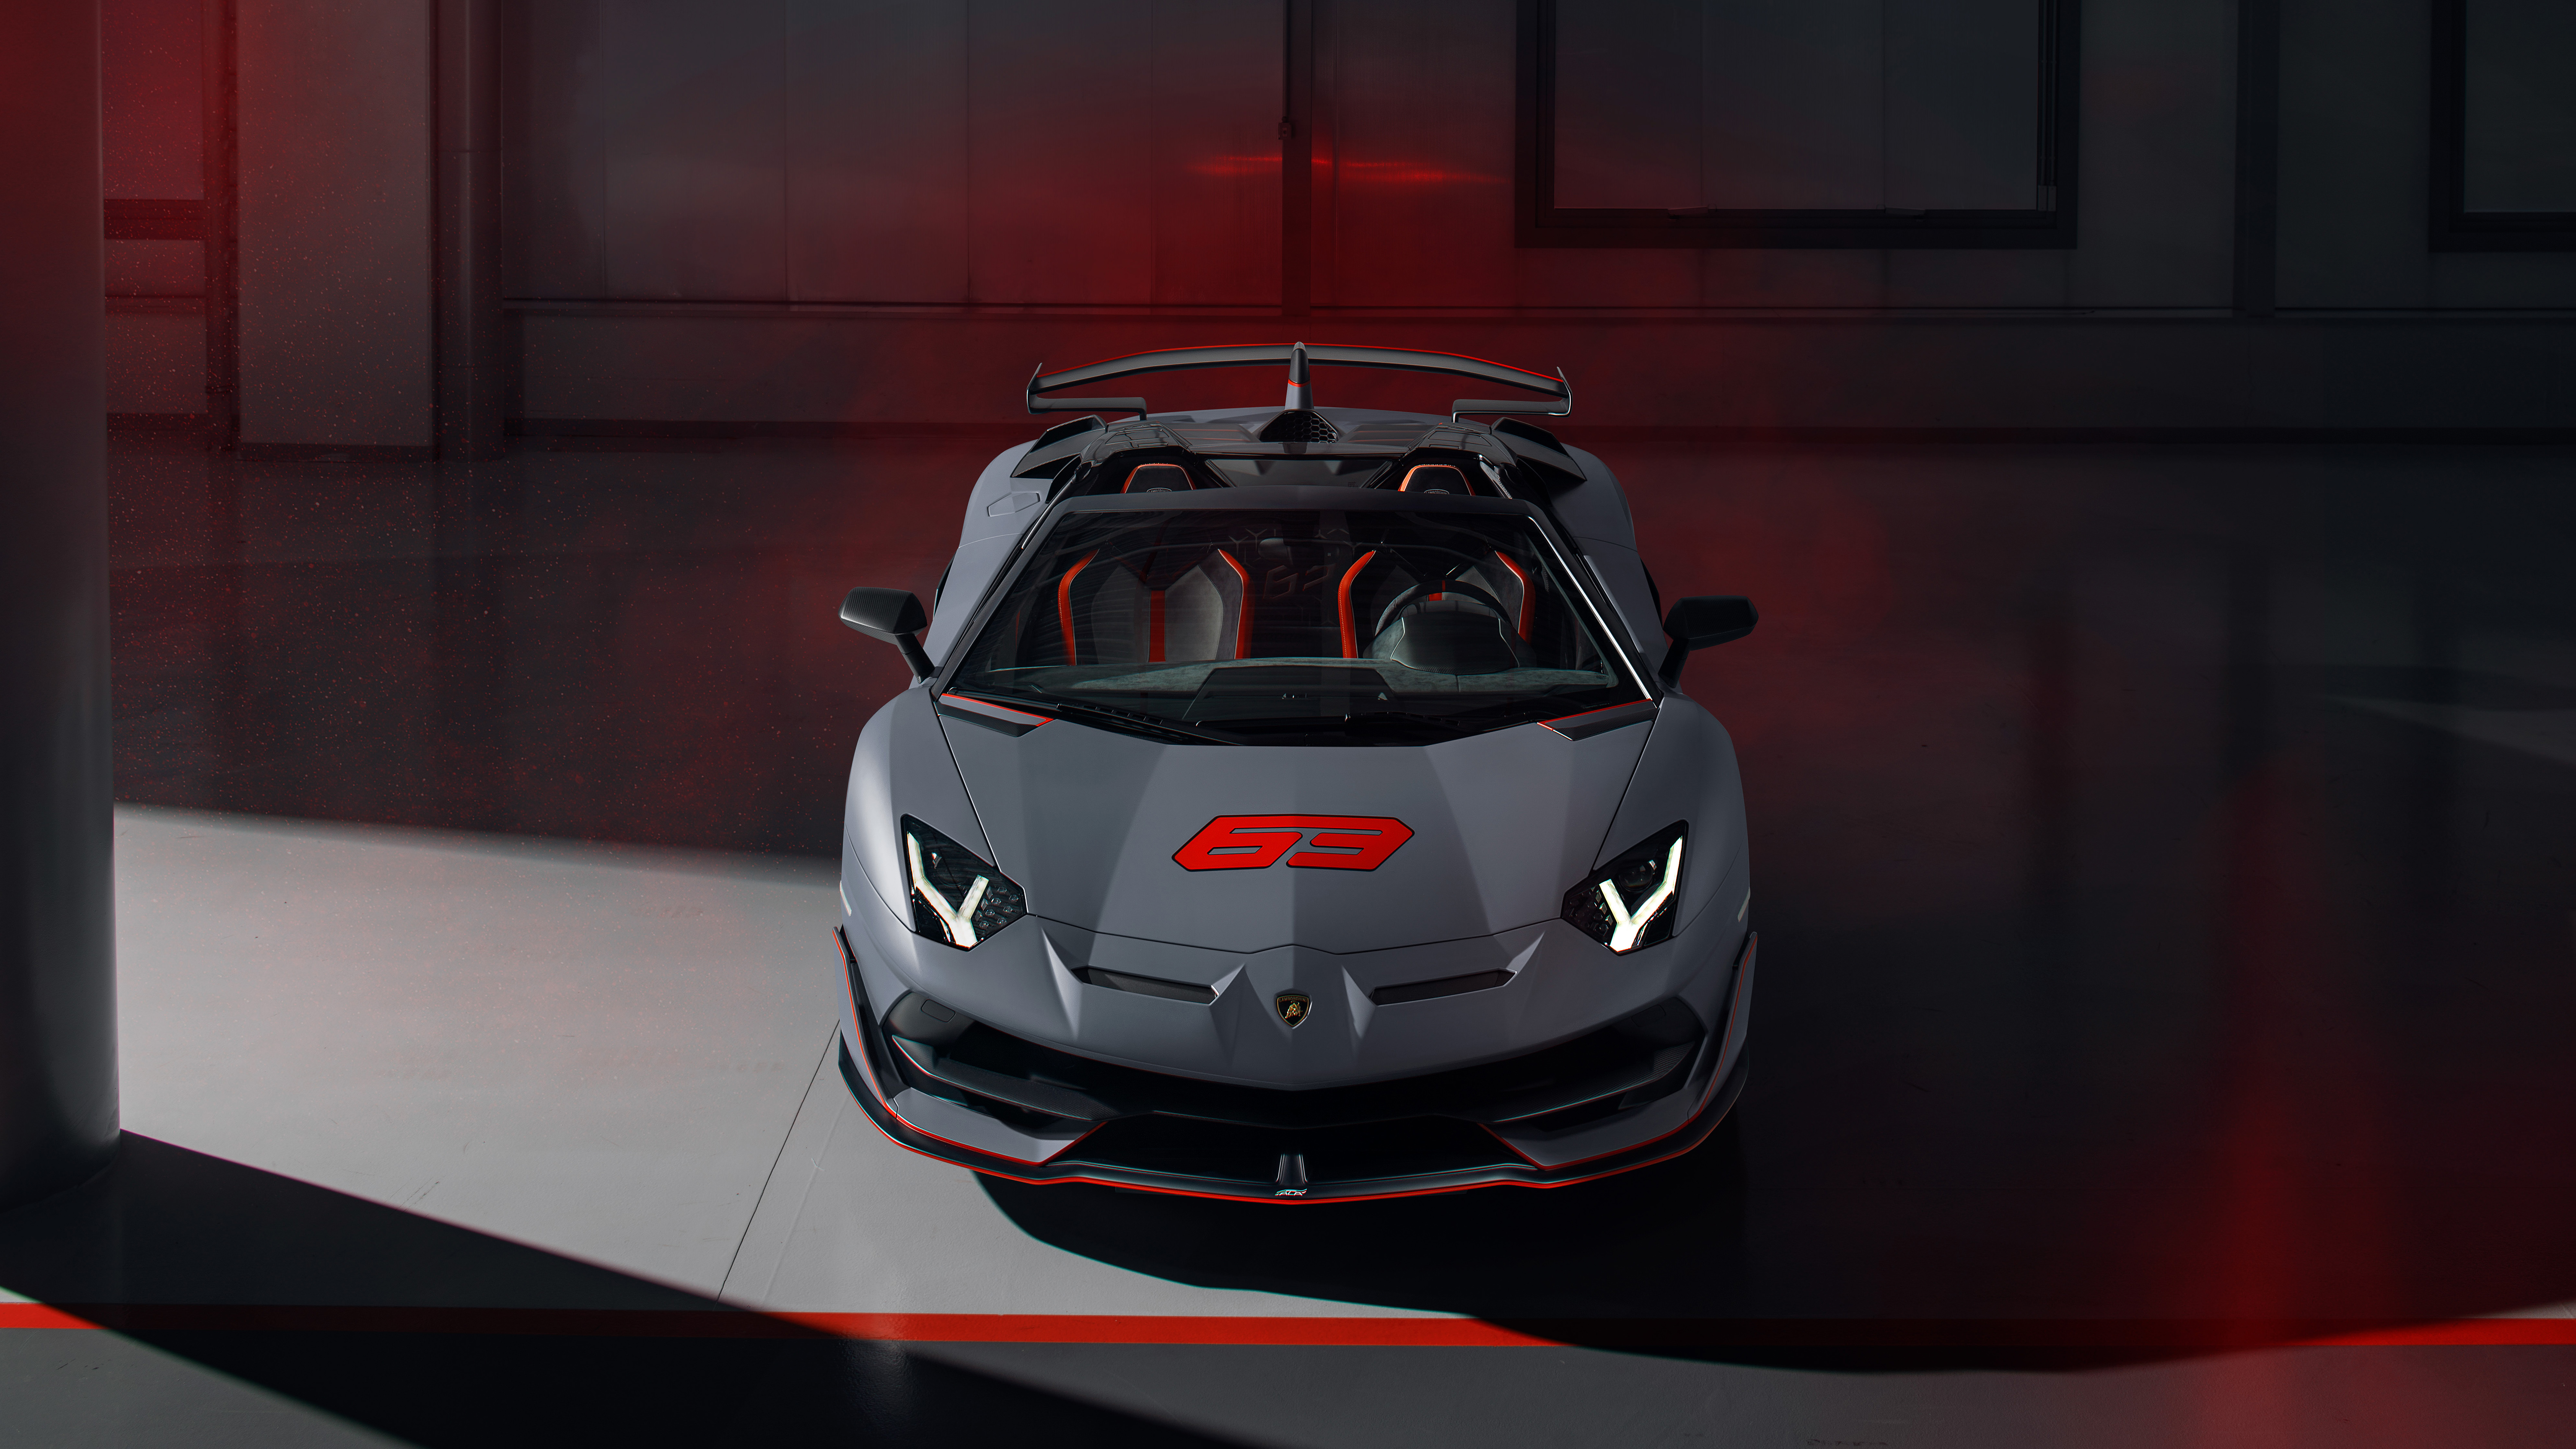 Lamborghini Aventador SVJ 63 Roadster 2020 4K Wallpaper ...